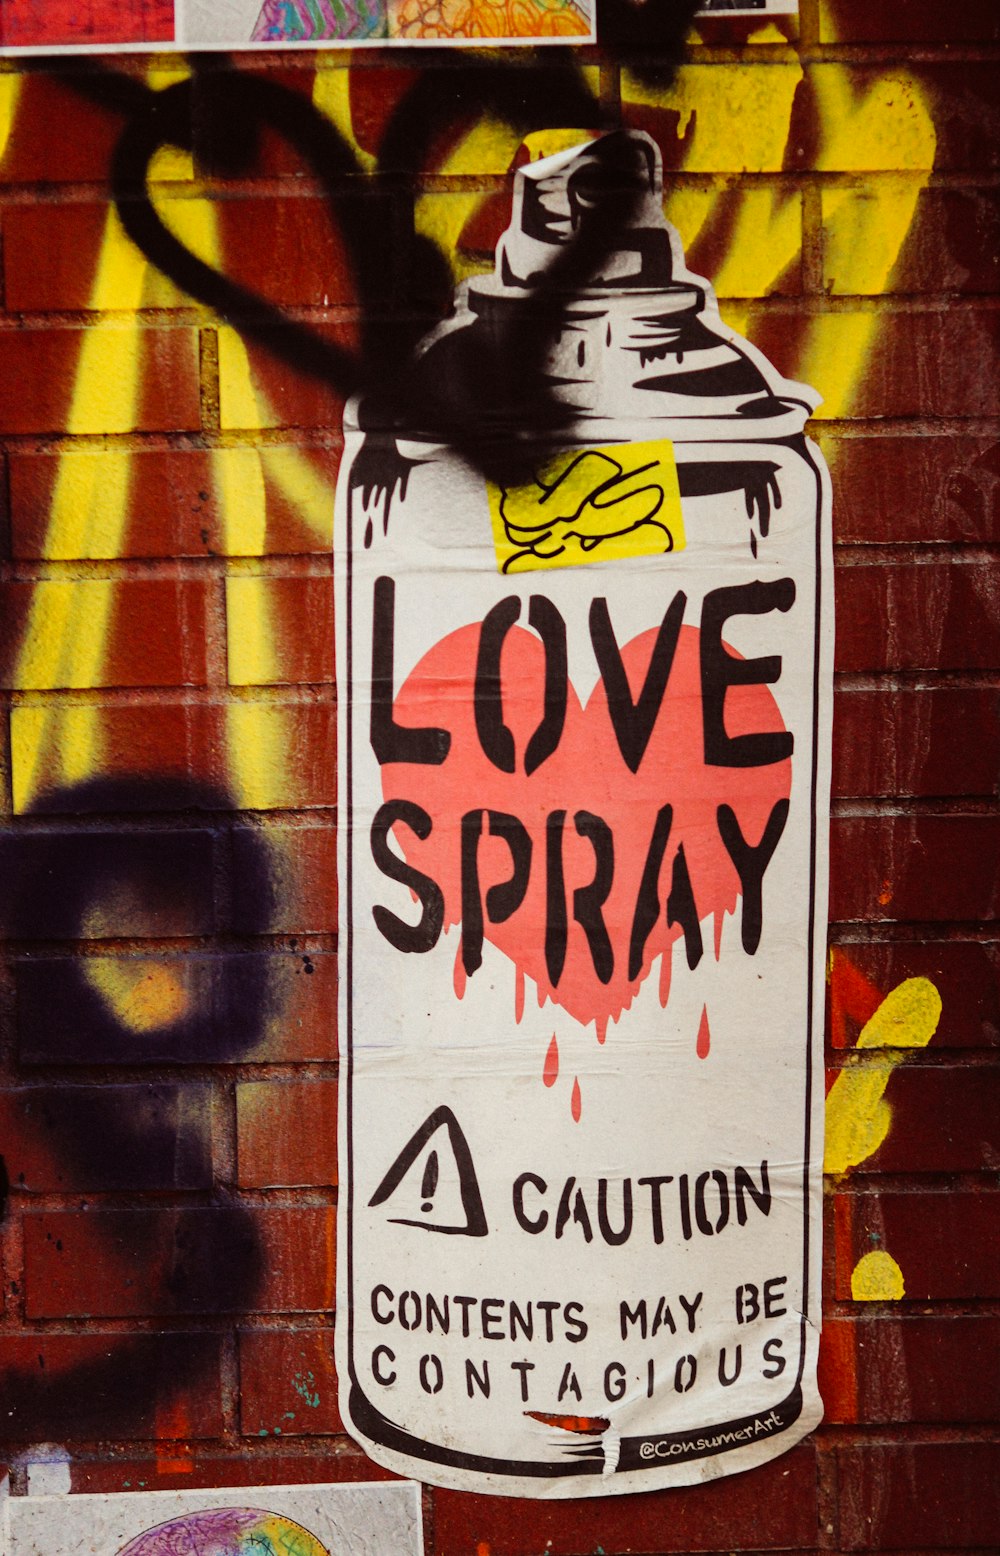 graffiti on a brick wall that says love spray